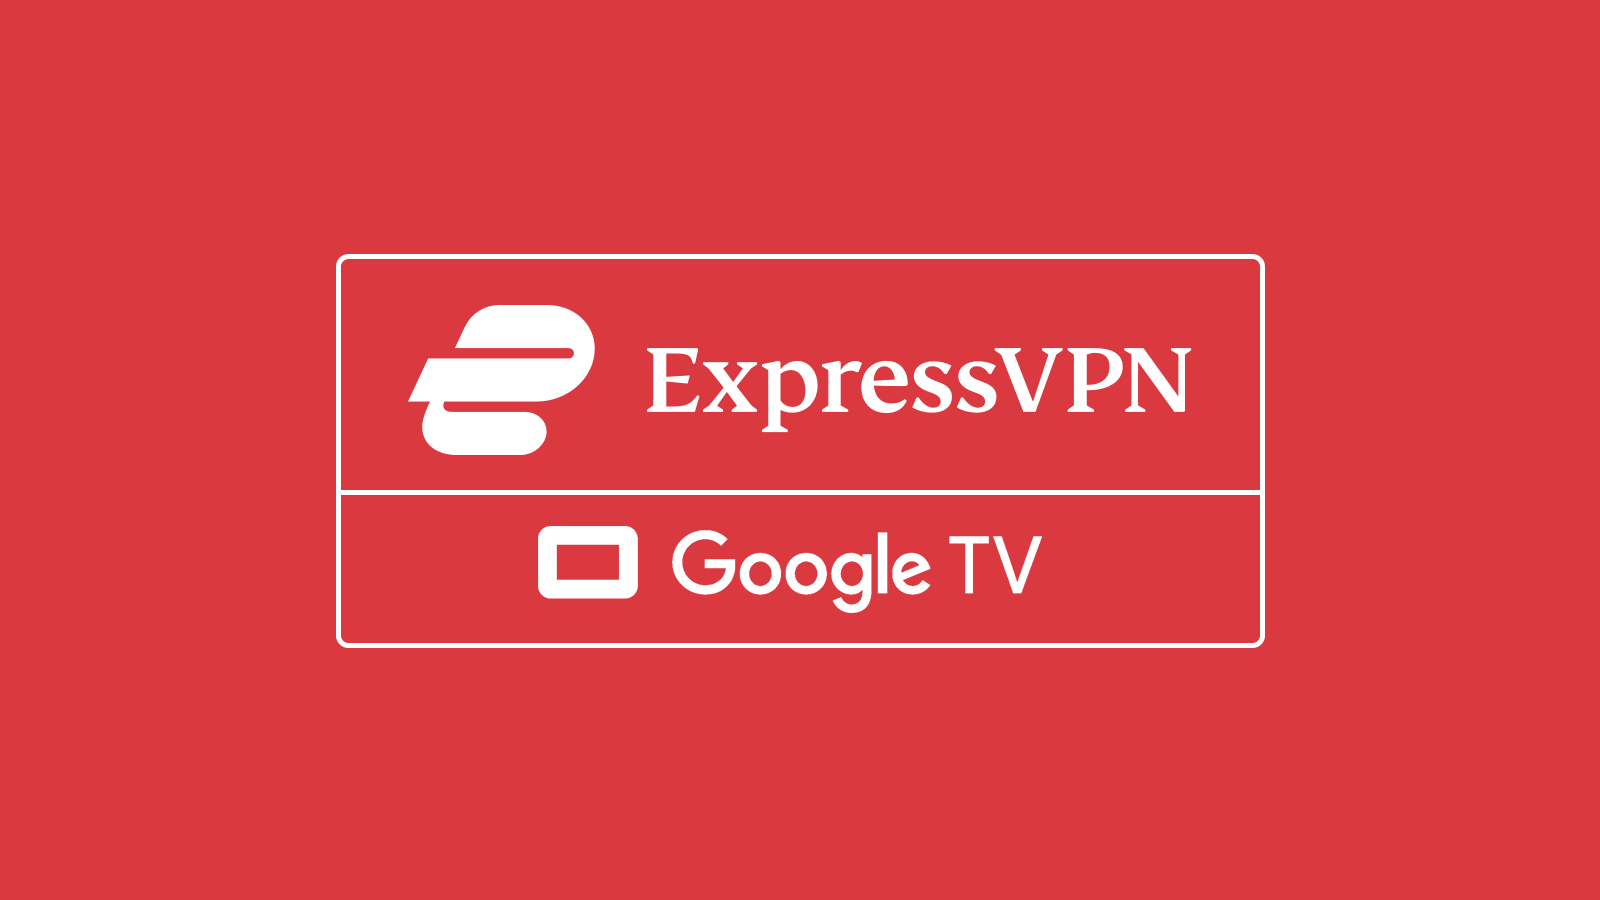 How to Install ExpressVPN on With Google TV - TechNadu